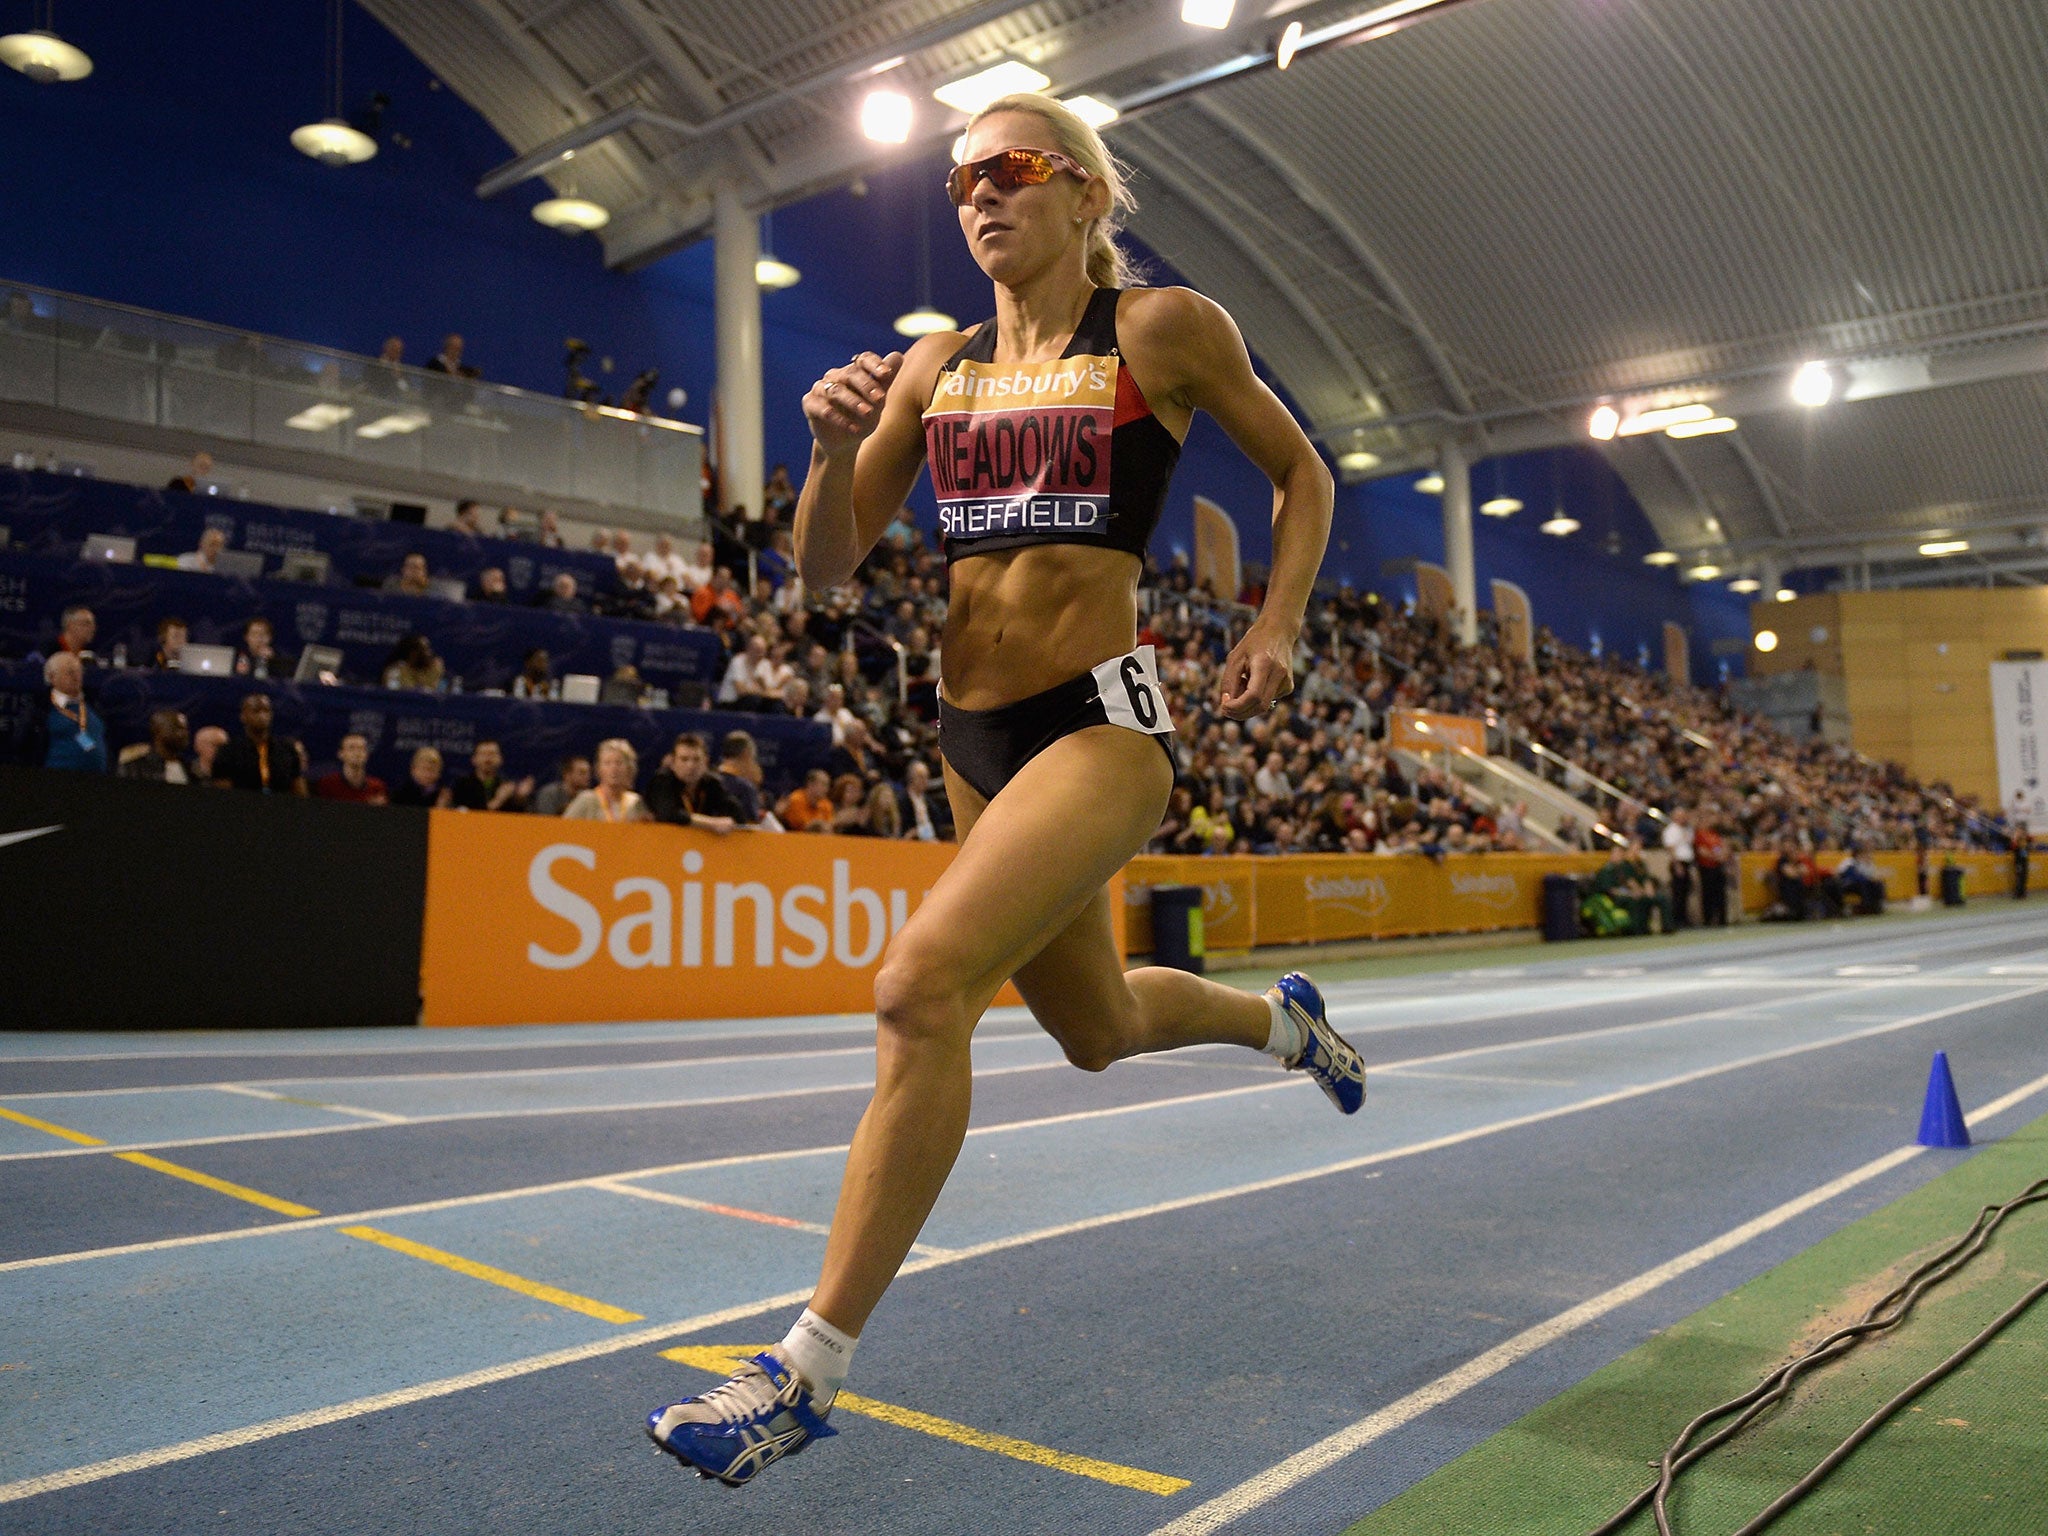 British athlete Jenny Meadows